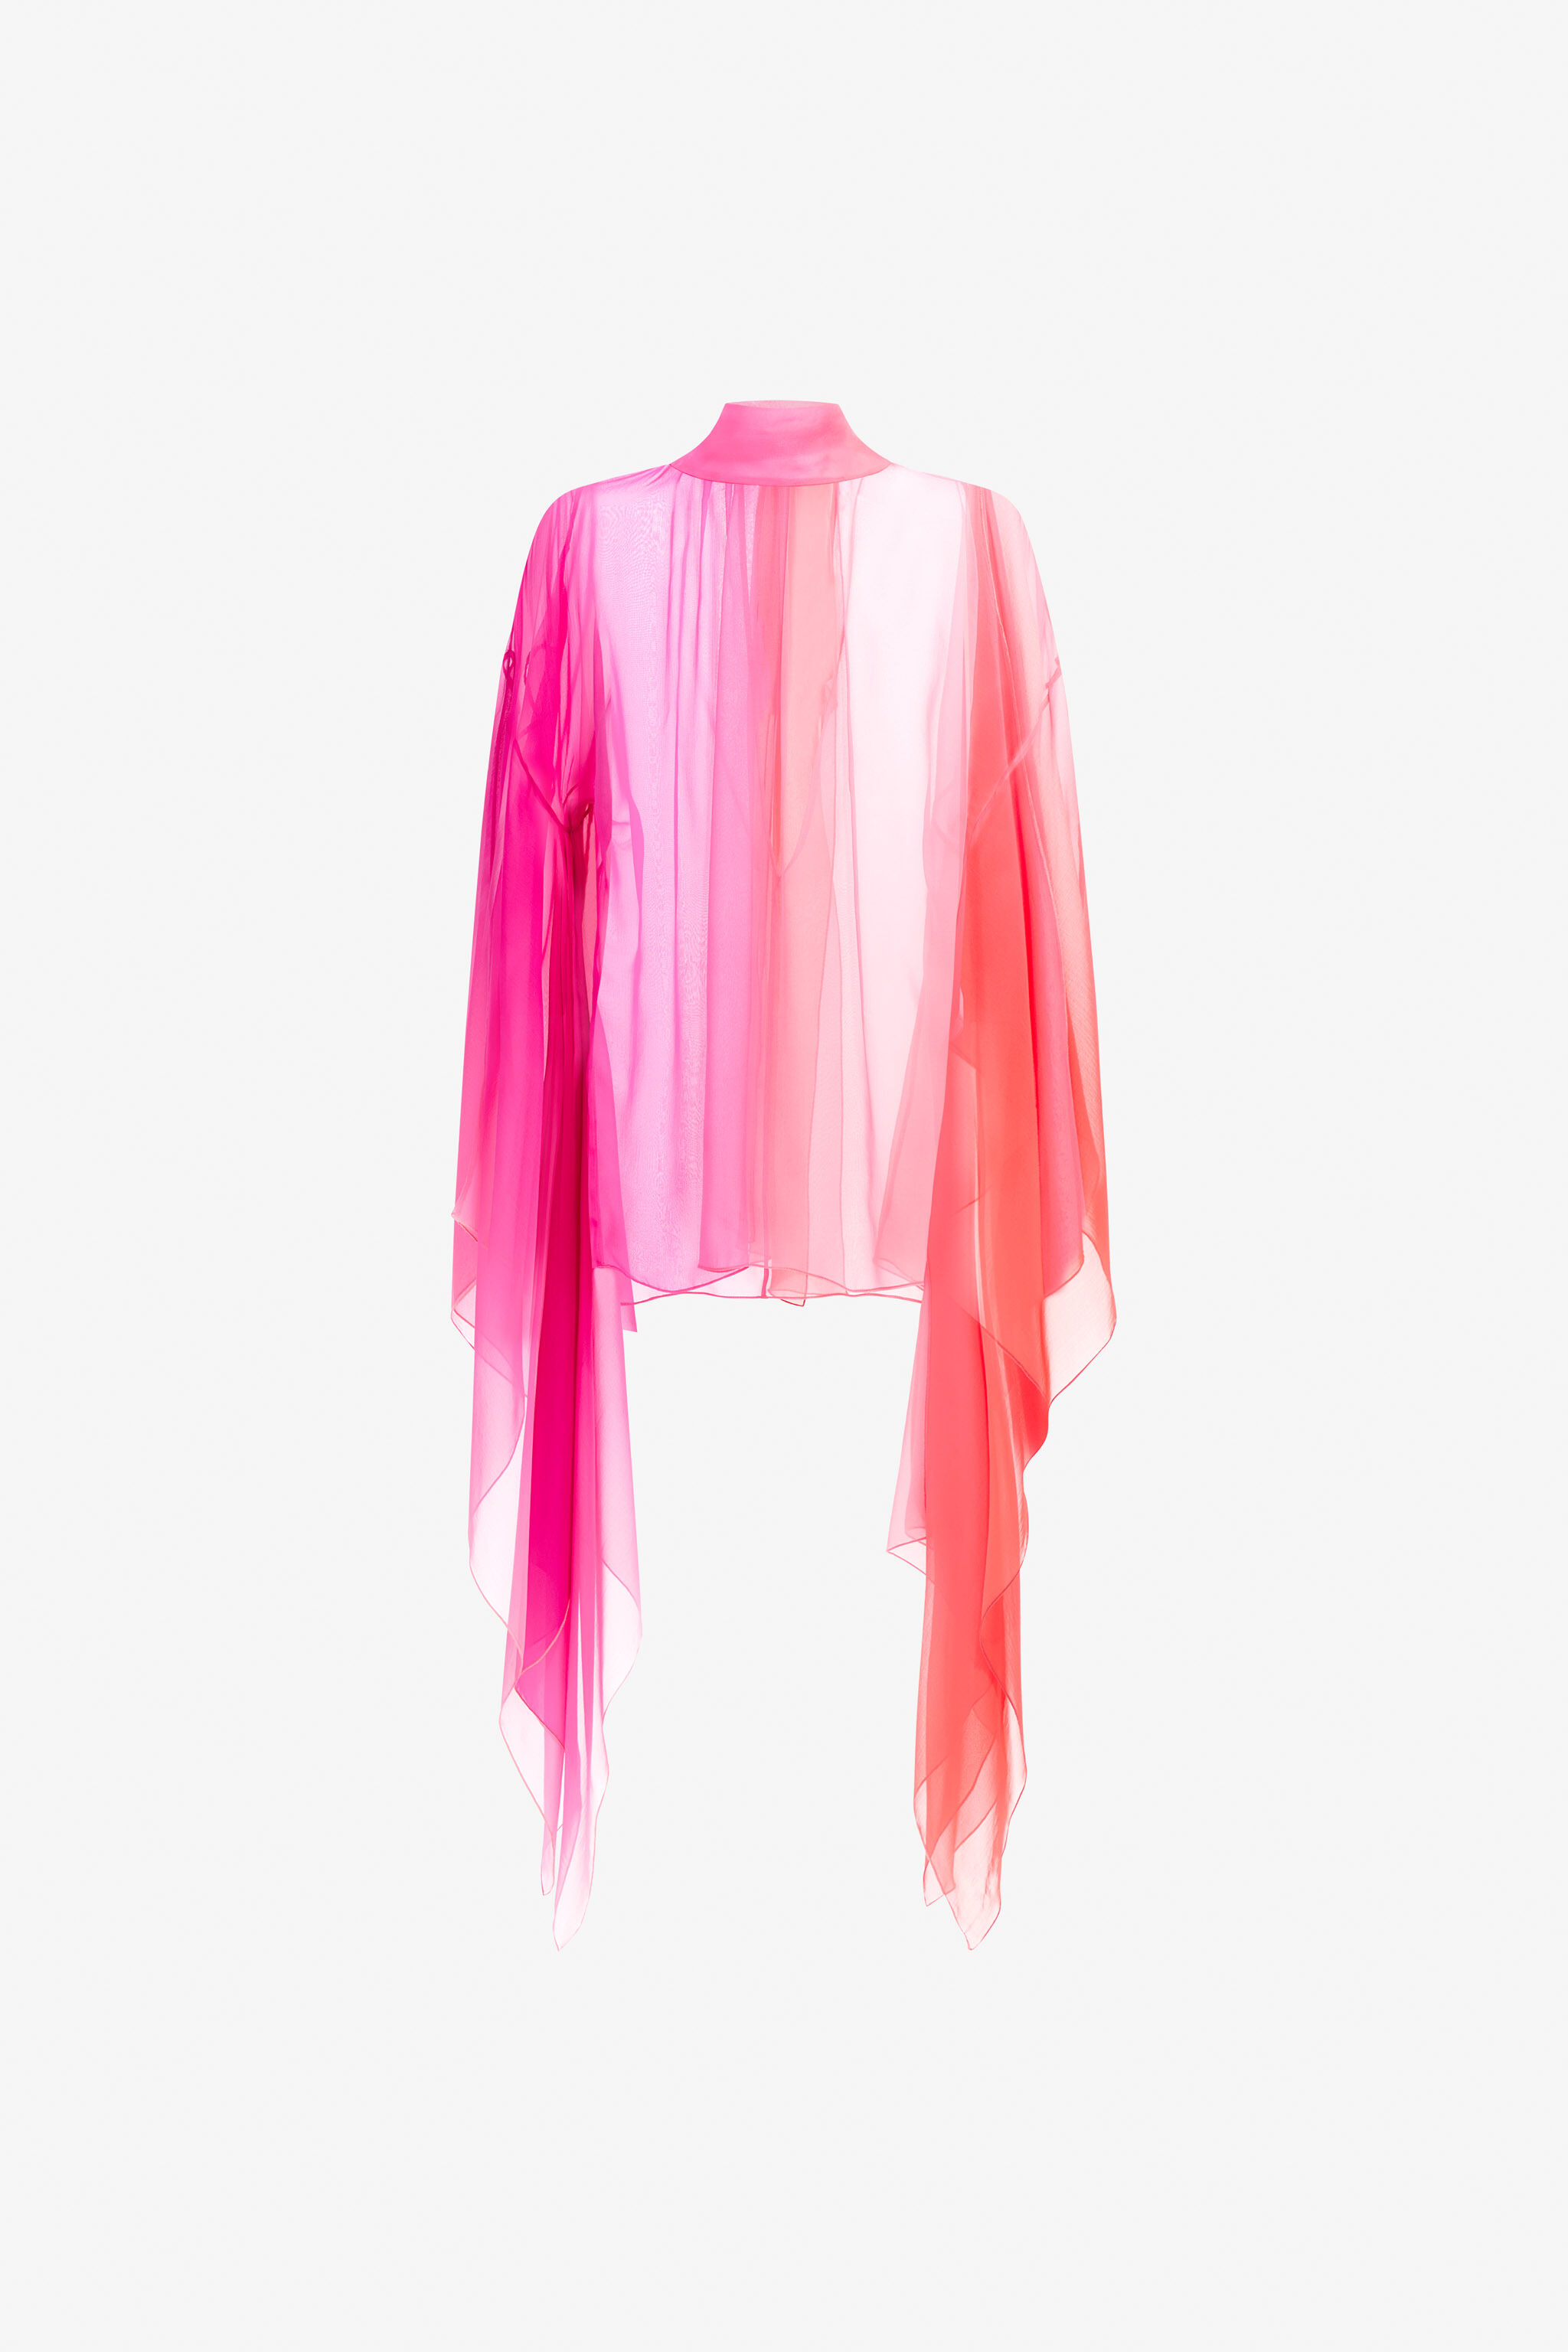 Roberto Cavalli plumage-print short kaftan - Pink